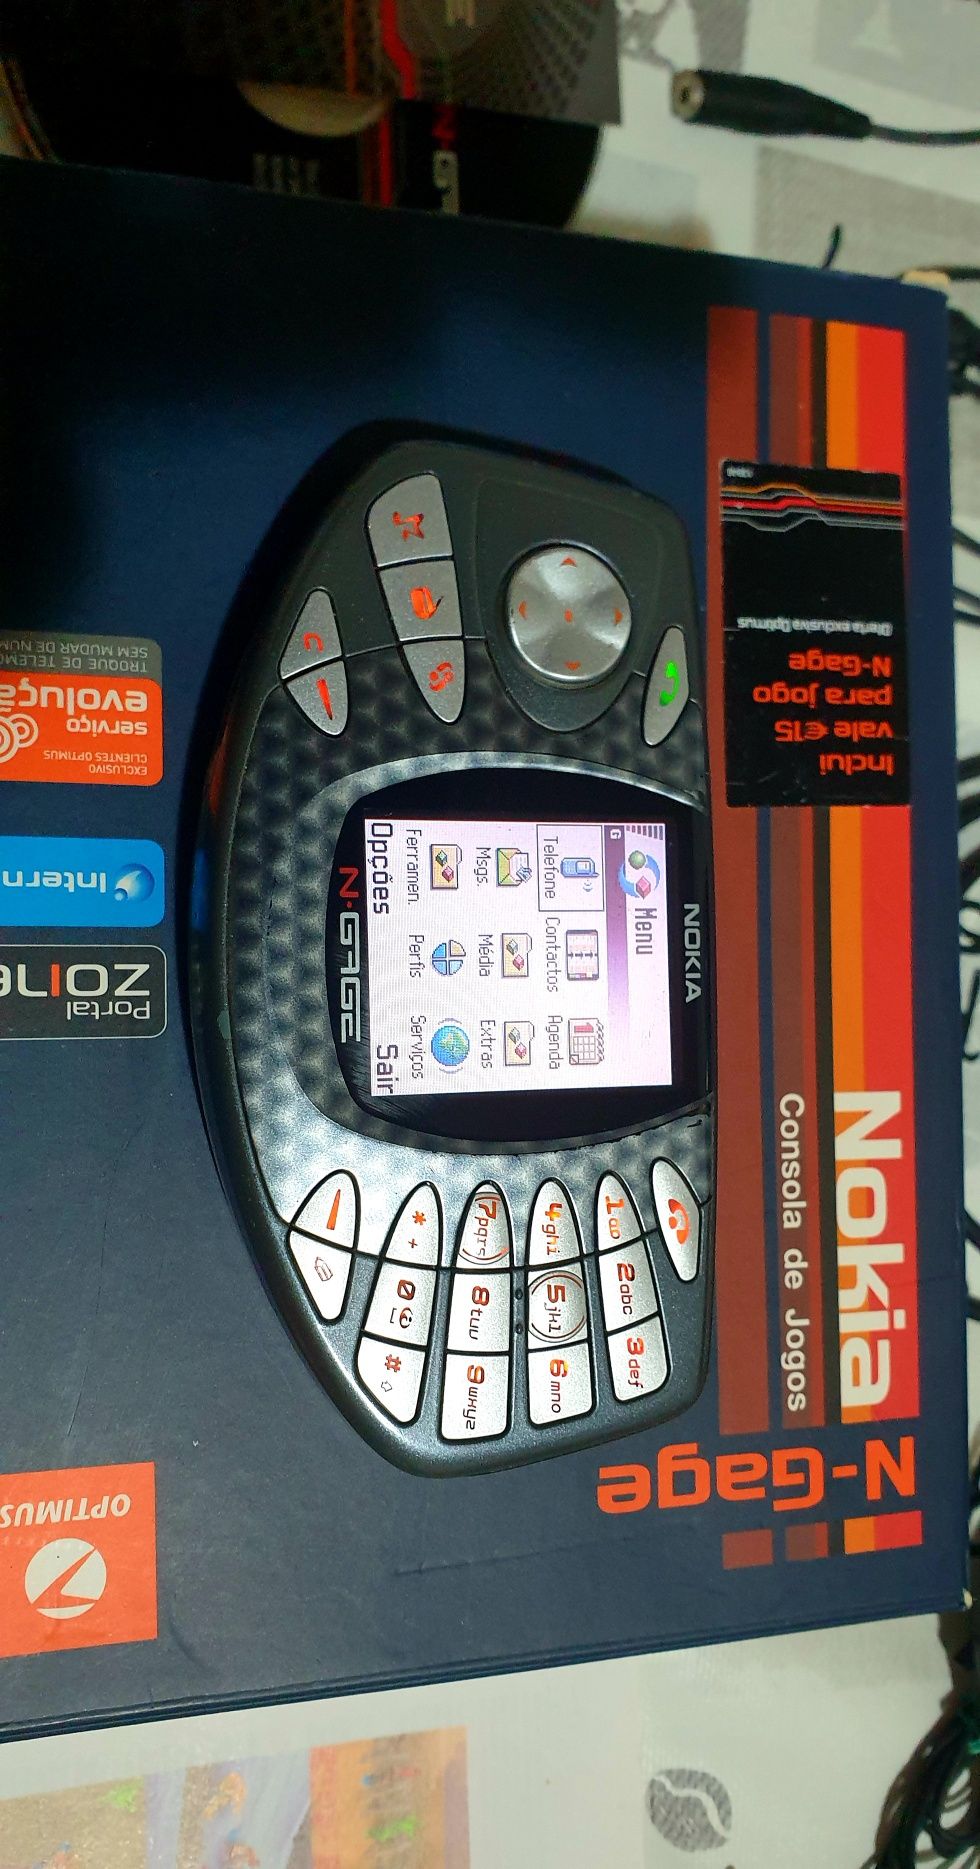 Nokia N-gage desbloqueado como novo!